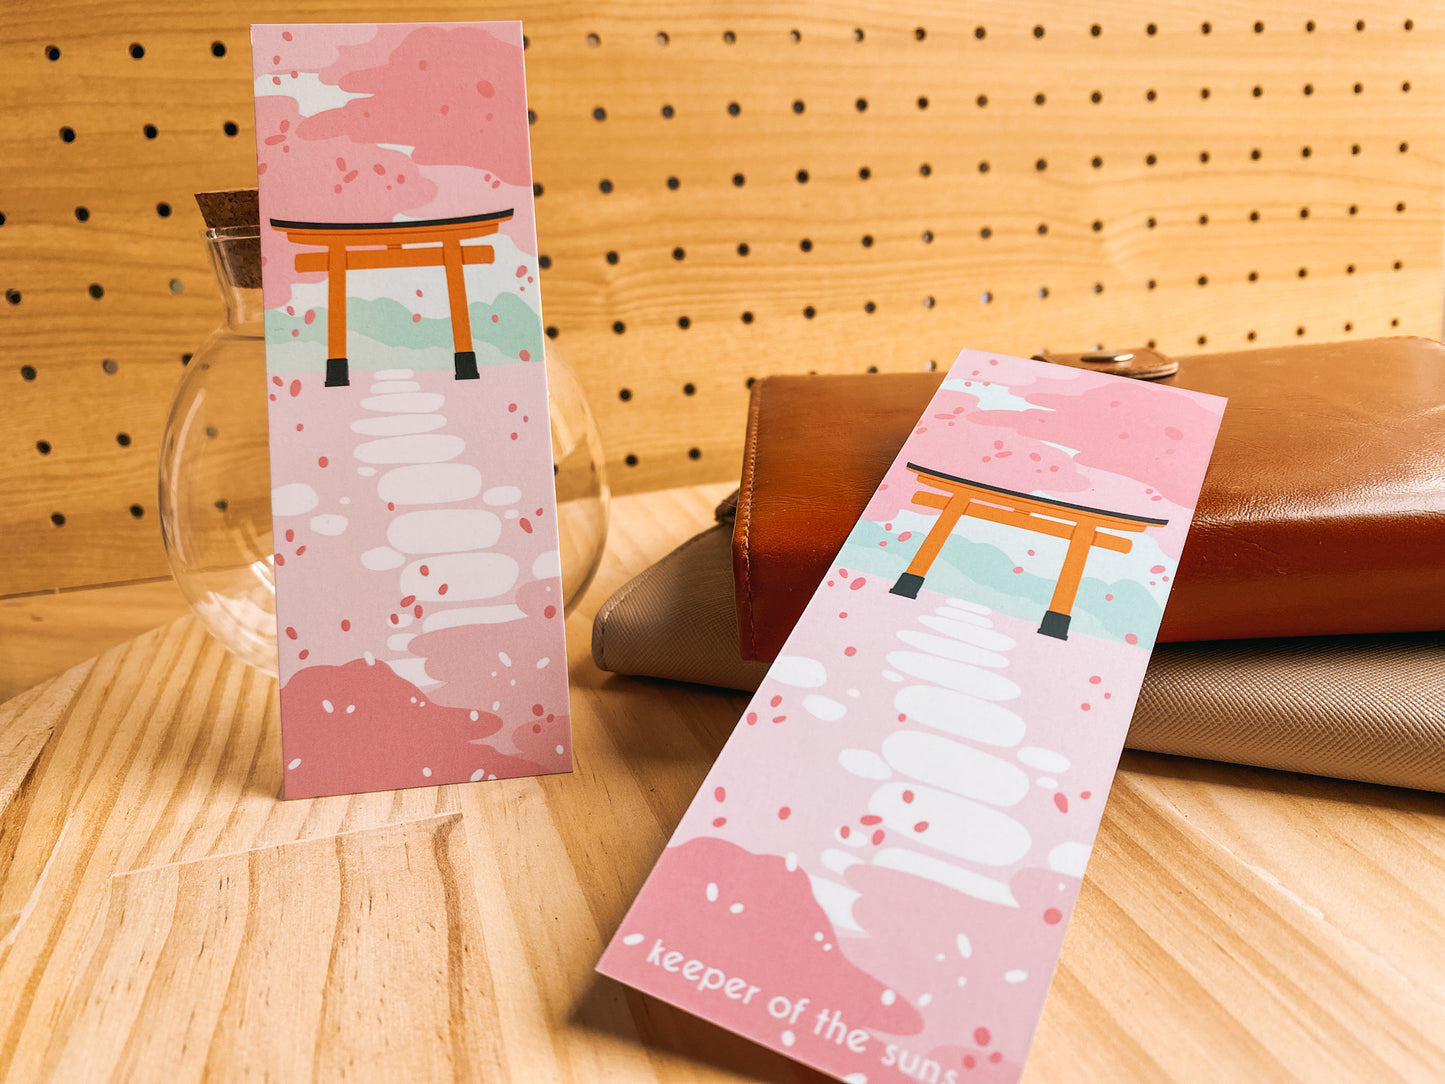 Sakura Torii Gate Bookmark | 400gsm Silky Smooth Velvet-Finish Bookmark